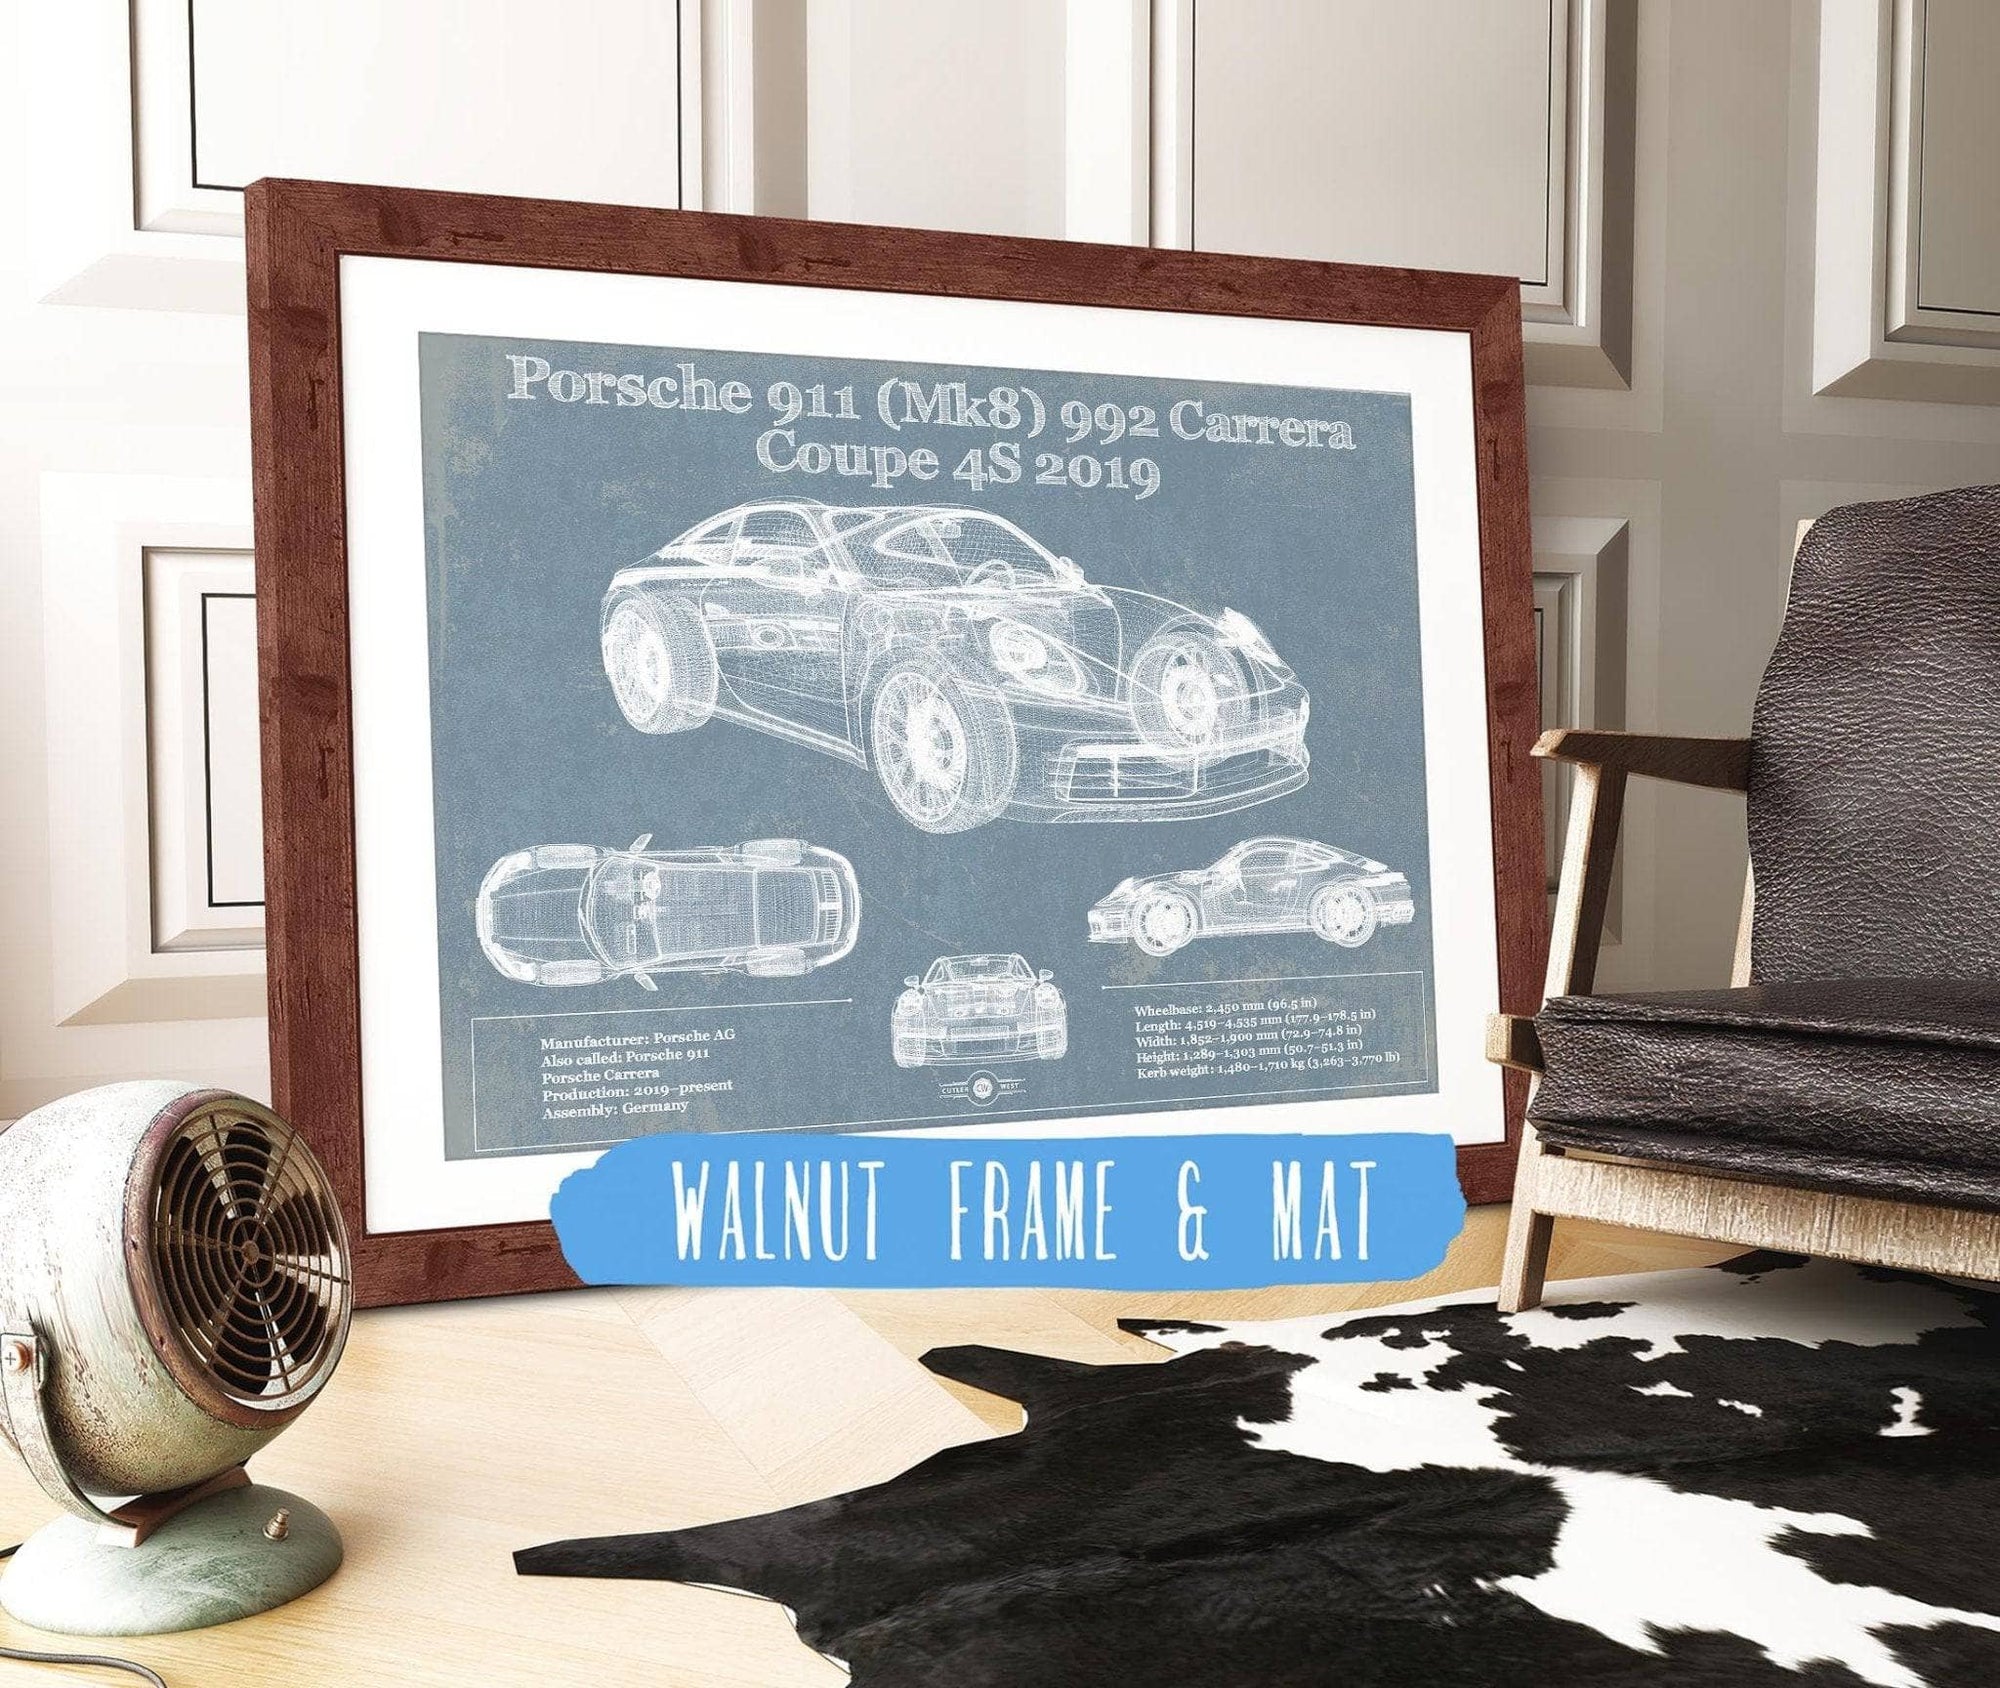 Cutler West Porsche Collection 14" x 11" / Walnut Frame & Mat Porsche 911 Mk8 992 Carrera Coupe 4s 2019 Vintage Blueprint Auto Print 845000299_68557